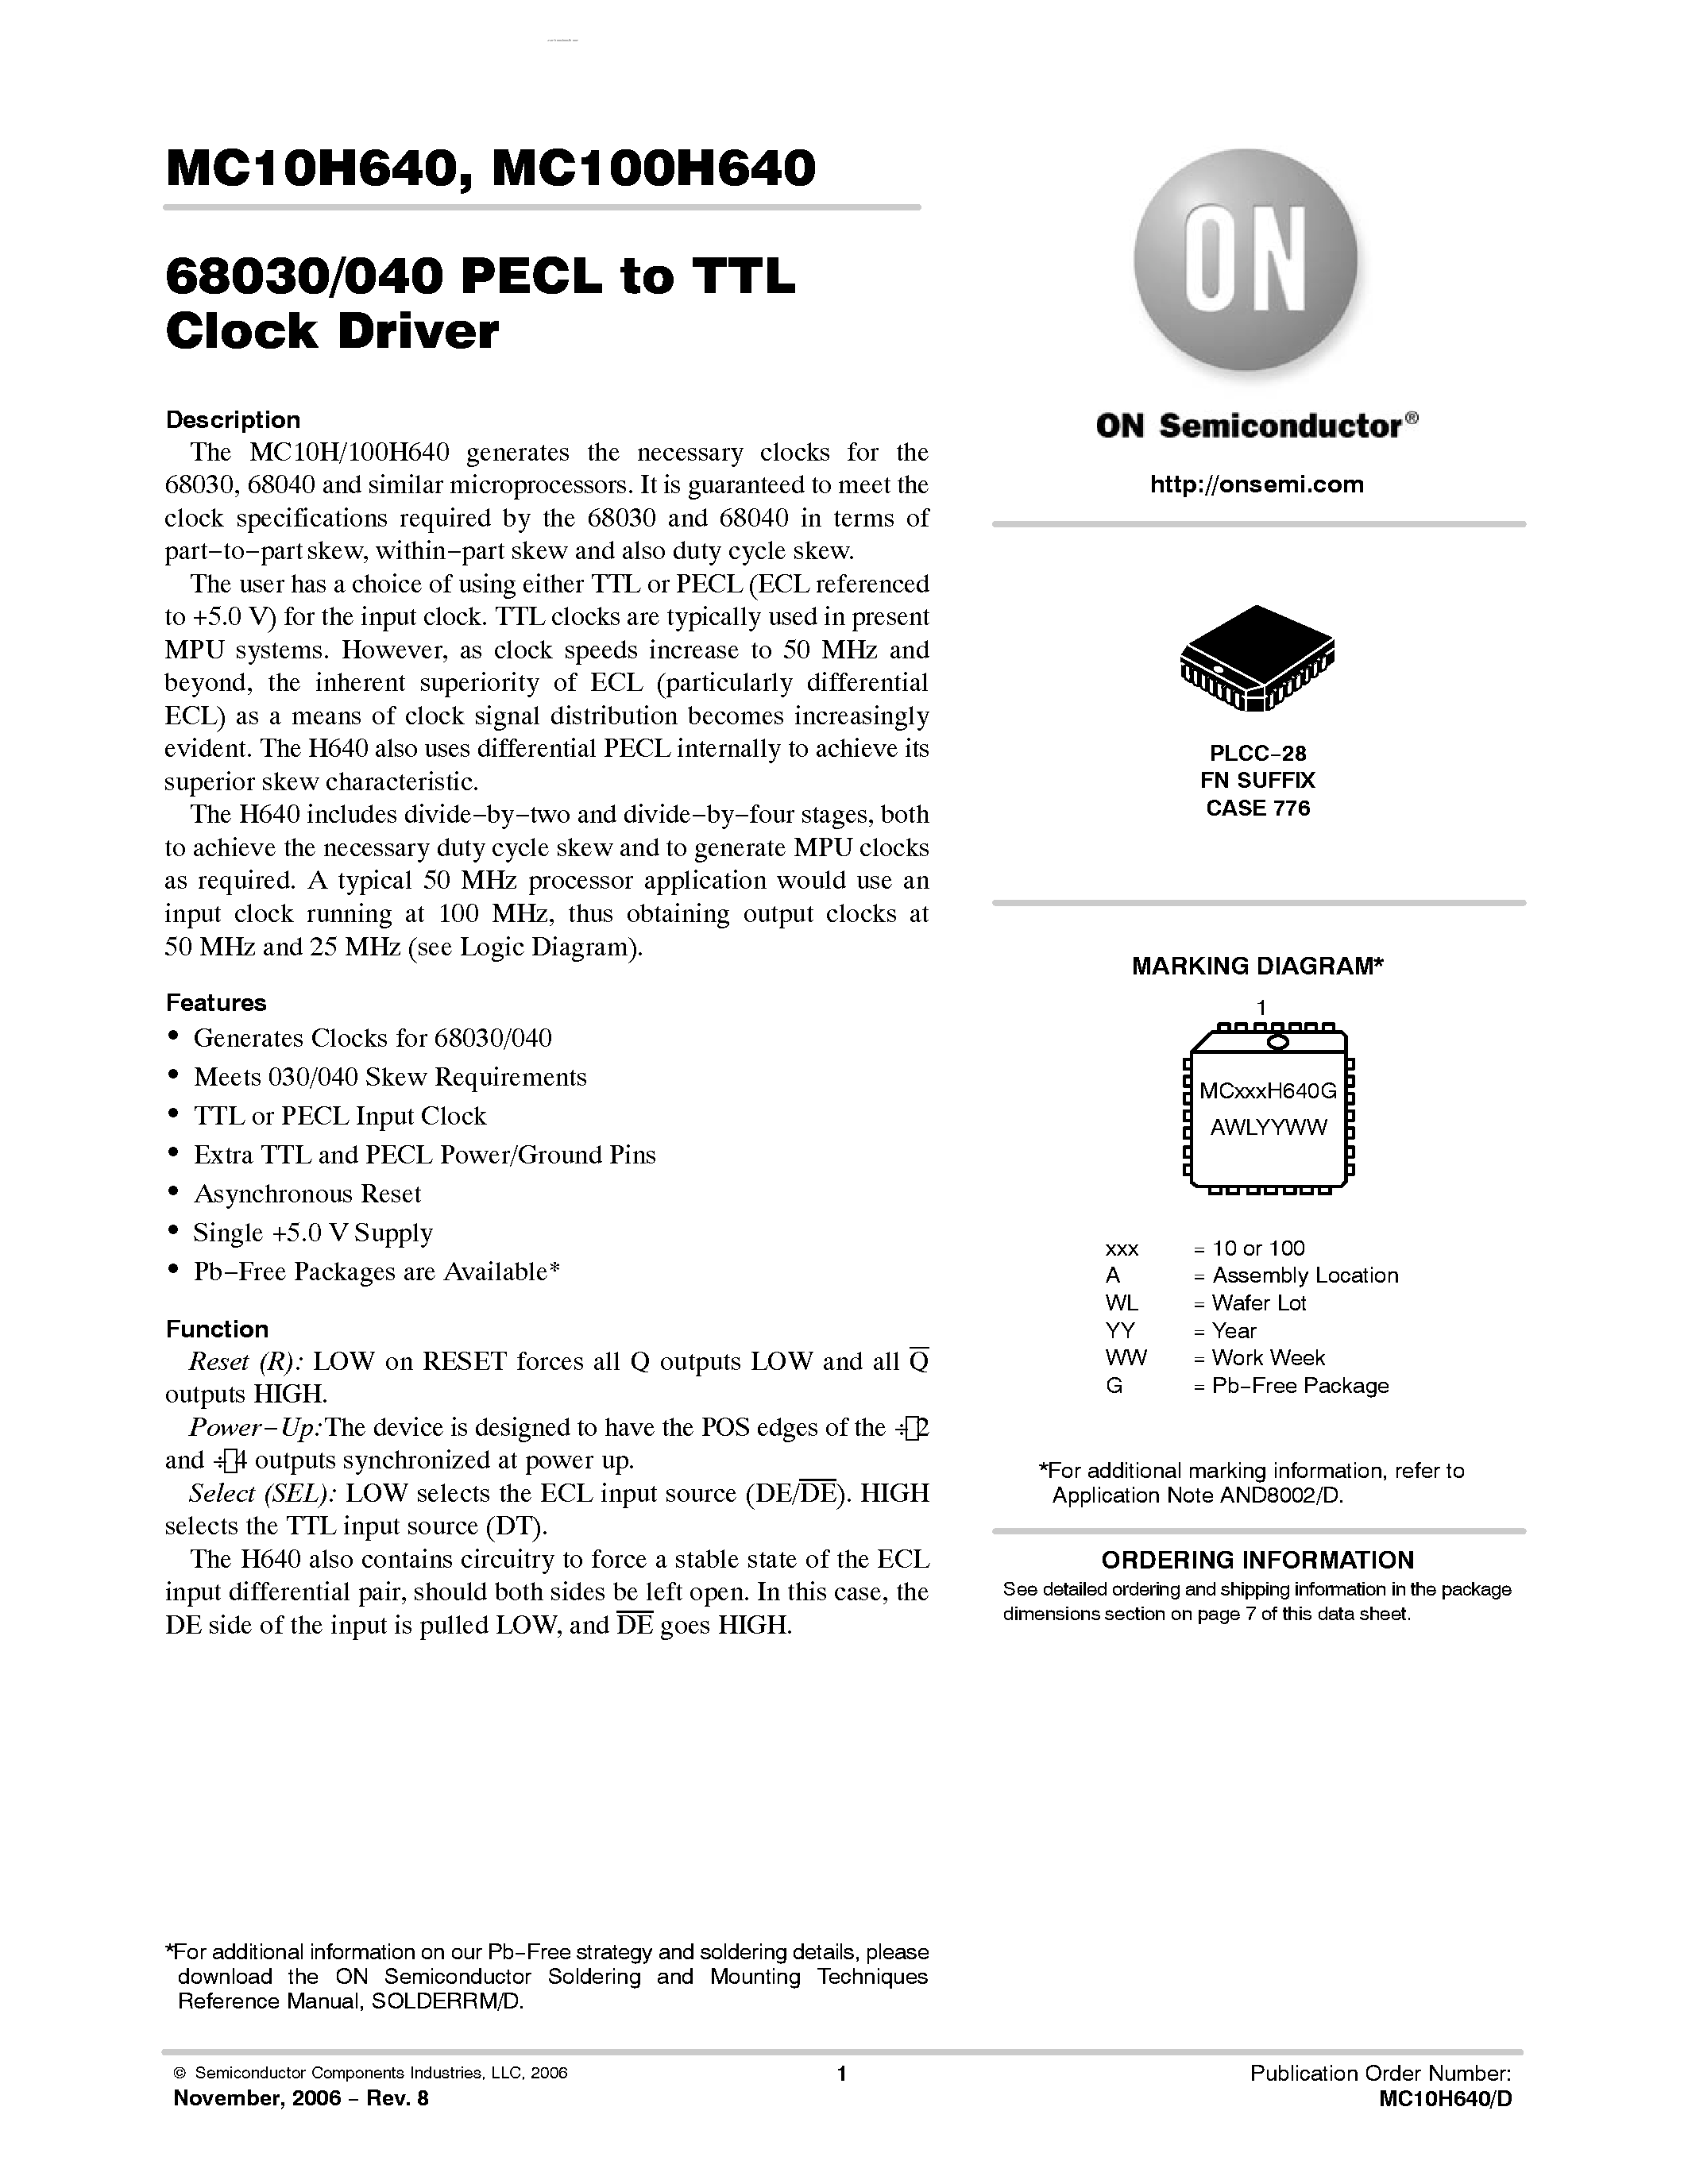 Datasheet MC10H640 - PECL-TTL CLOCK DRIVER page 1